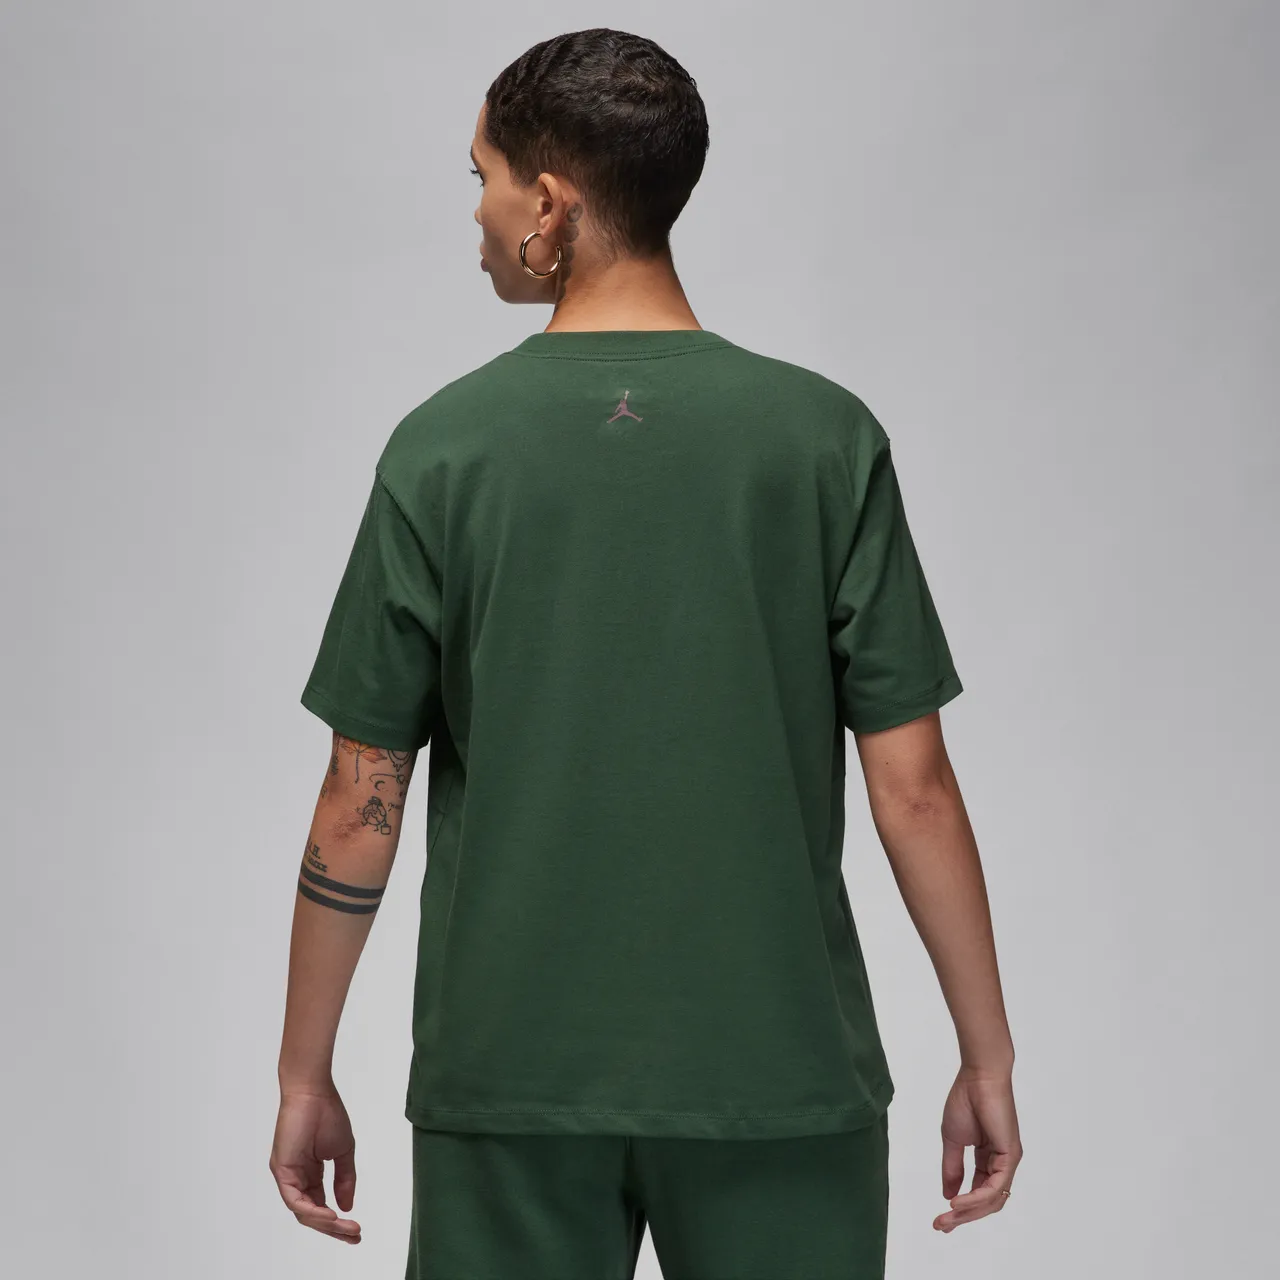 Jordan Women's Graphic T-Shirt - Green - Cotton